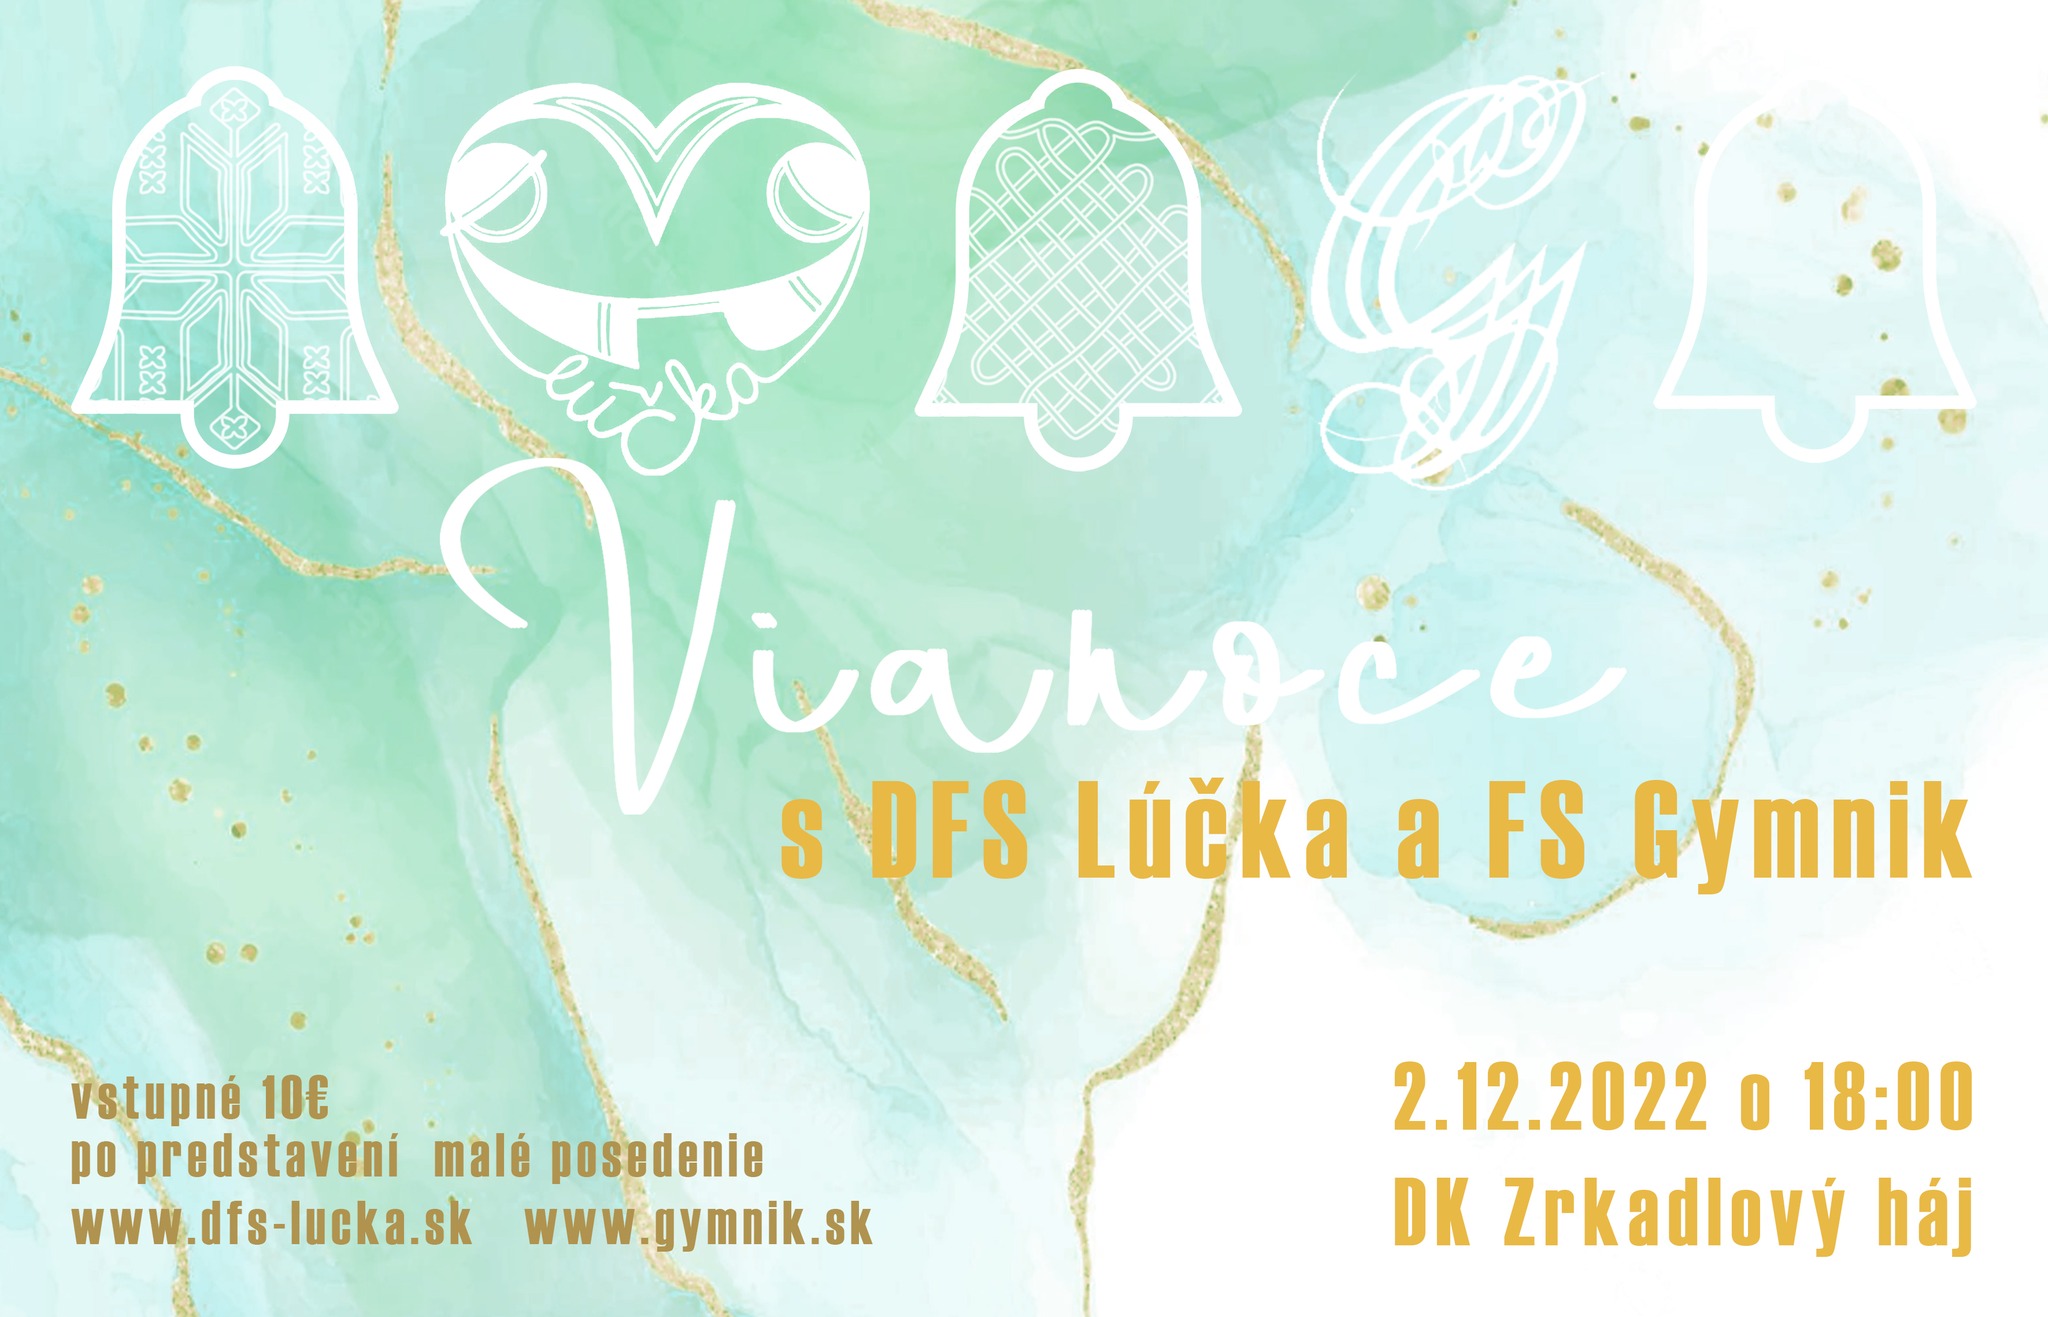 Vianoce s DFS Lka a FS Gymnik 2022 Bratislava